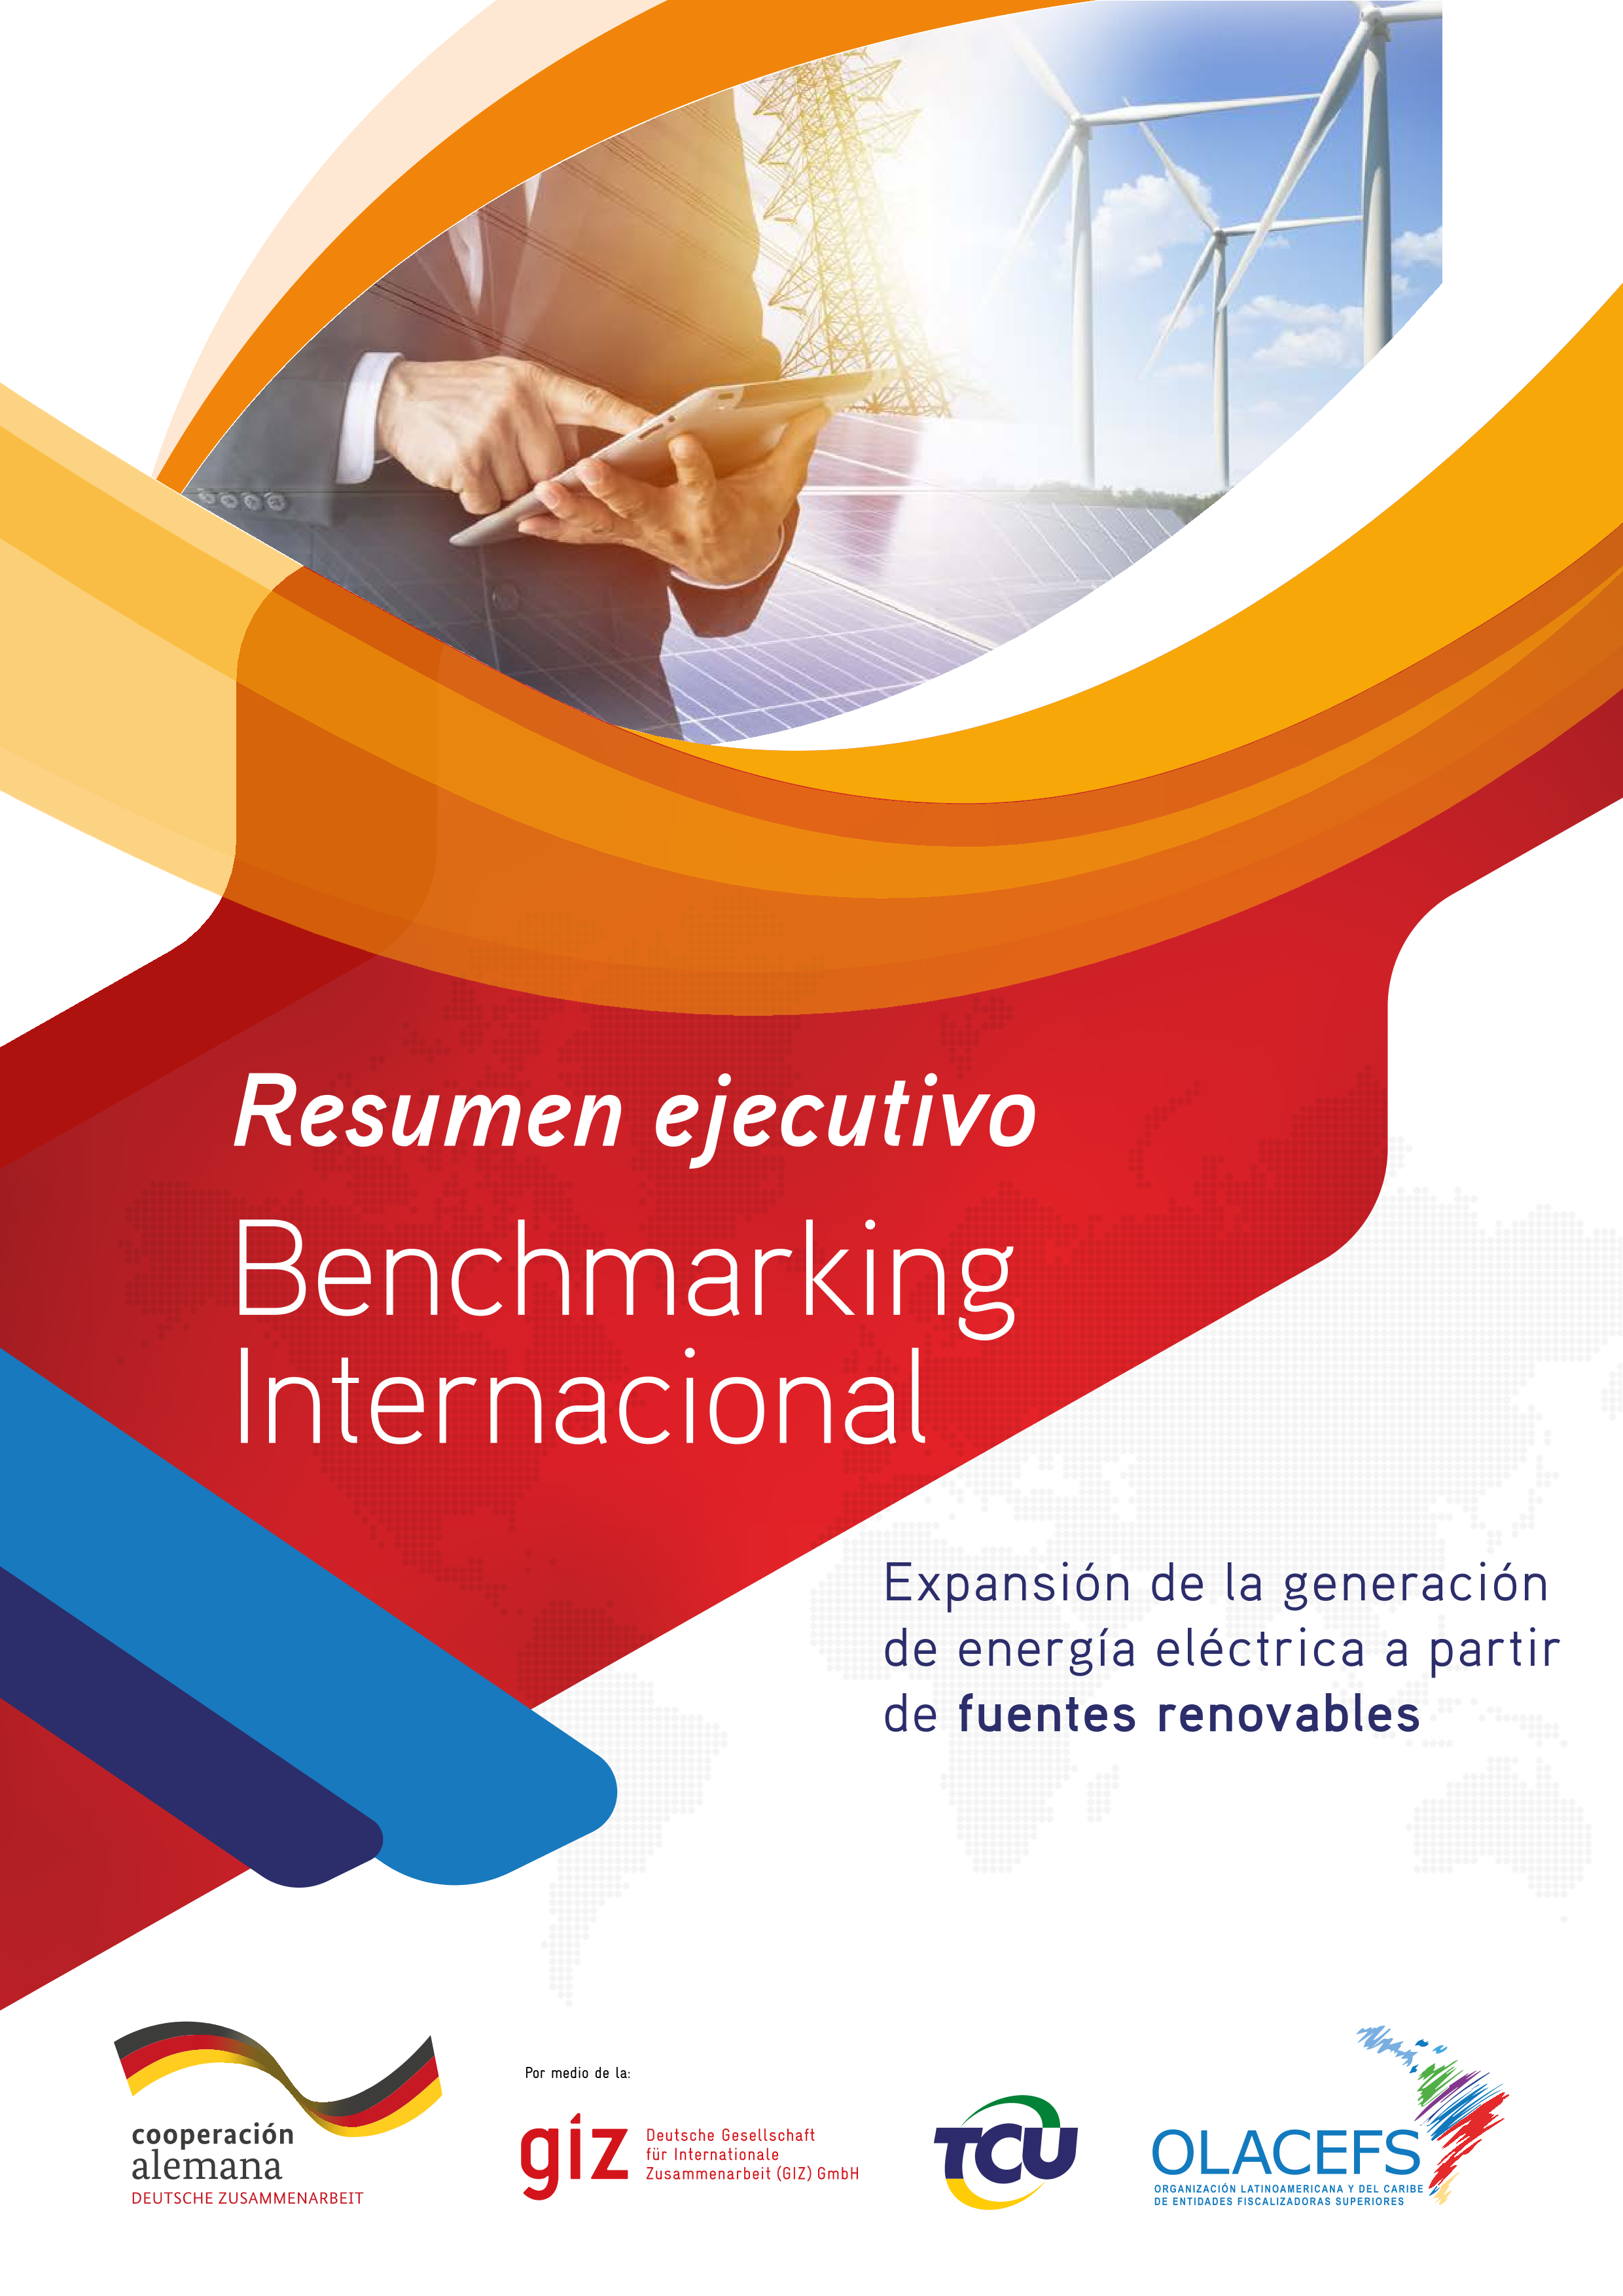 resumen_ejecutivo_benchmarking_internacional_expansion_generacion_energia_eletrica_giz.png